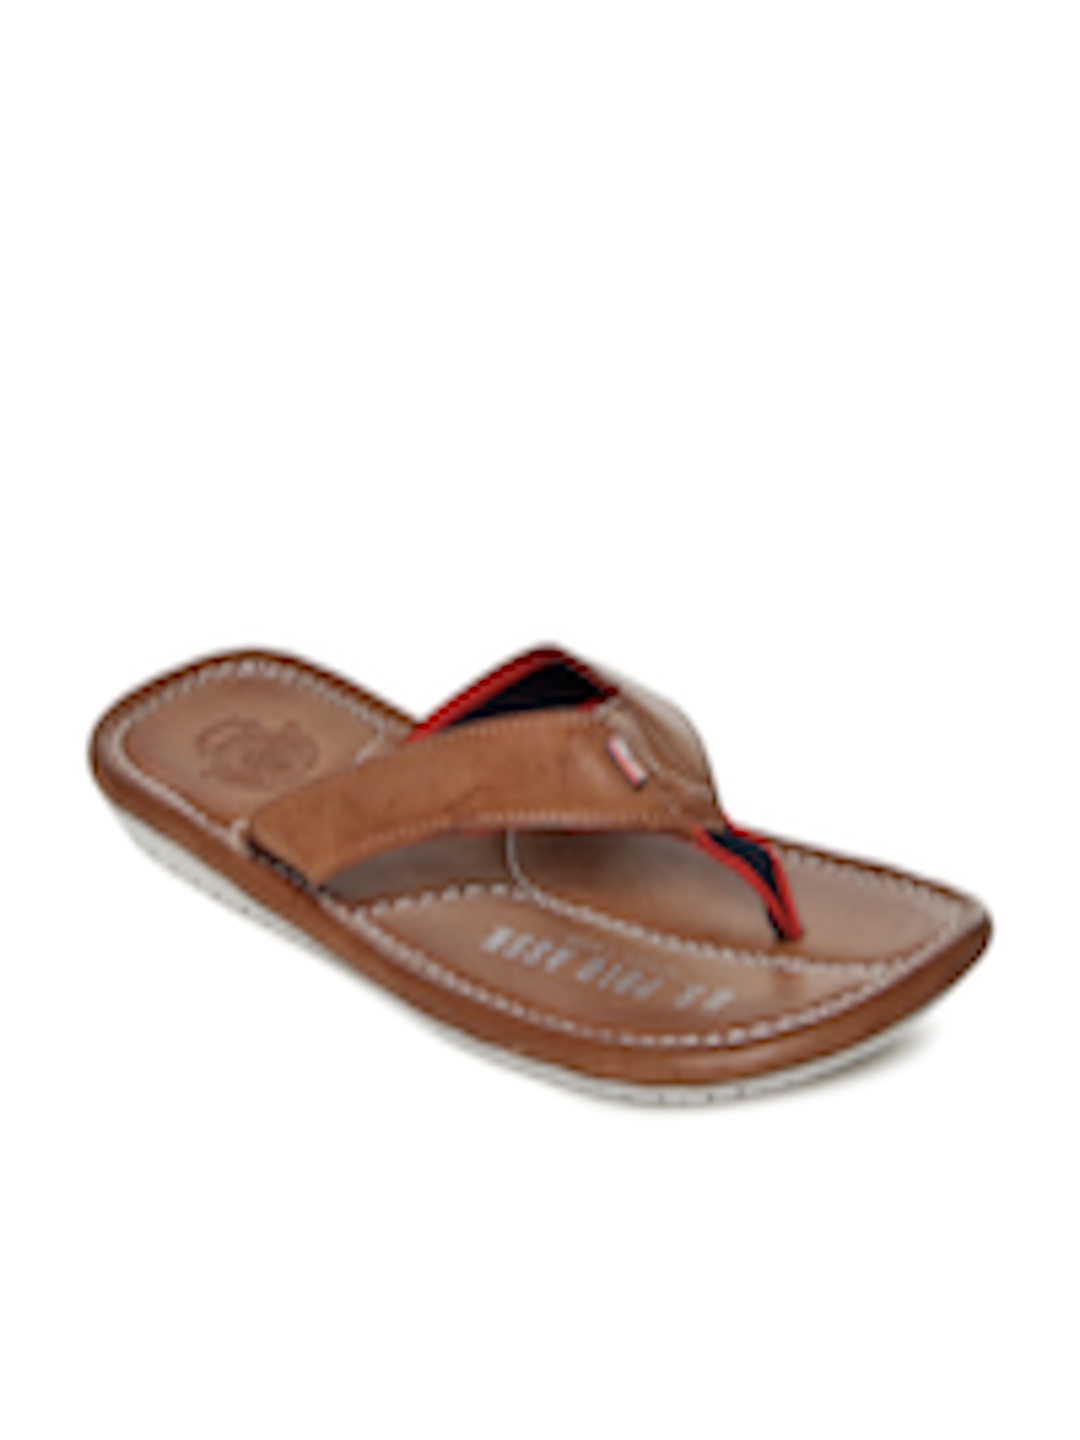 Buy U.S. Polo Assn. Men Brown Sandals - Sandals for Men 75155 | Myntra